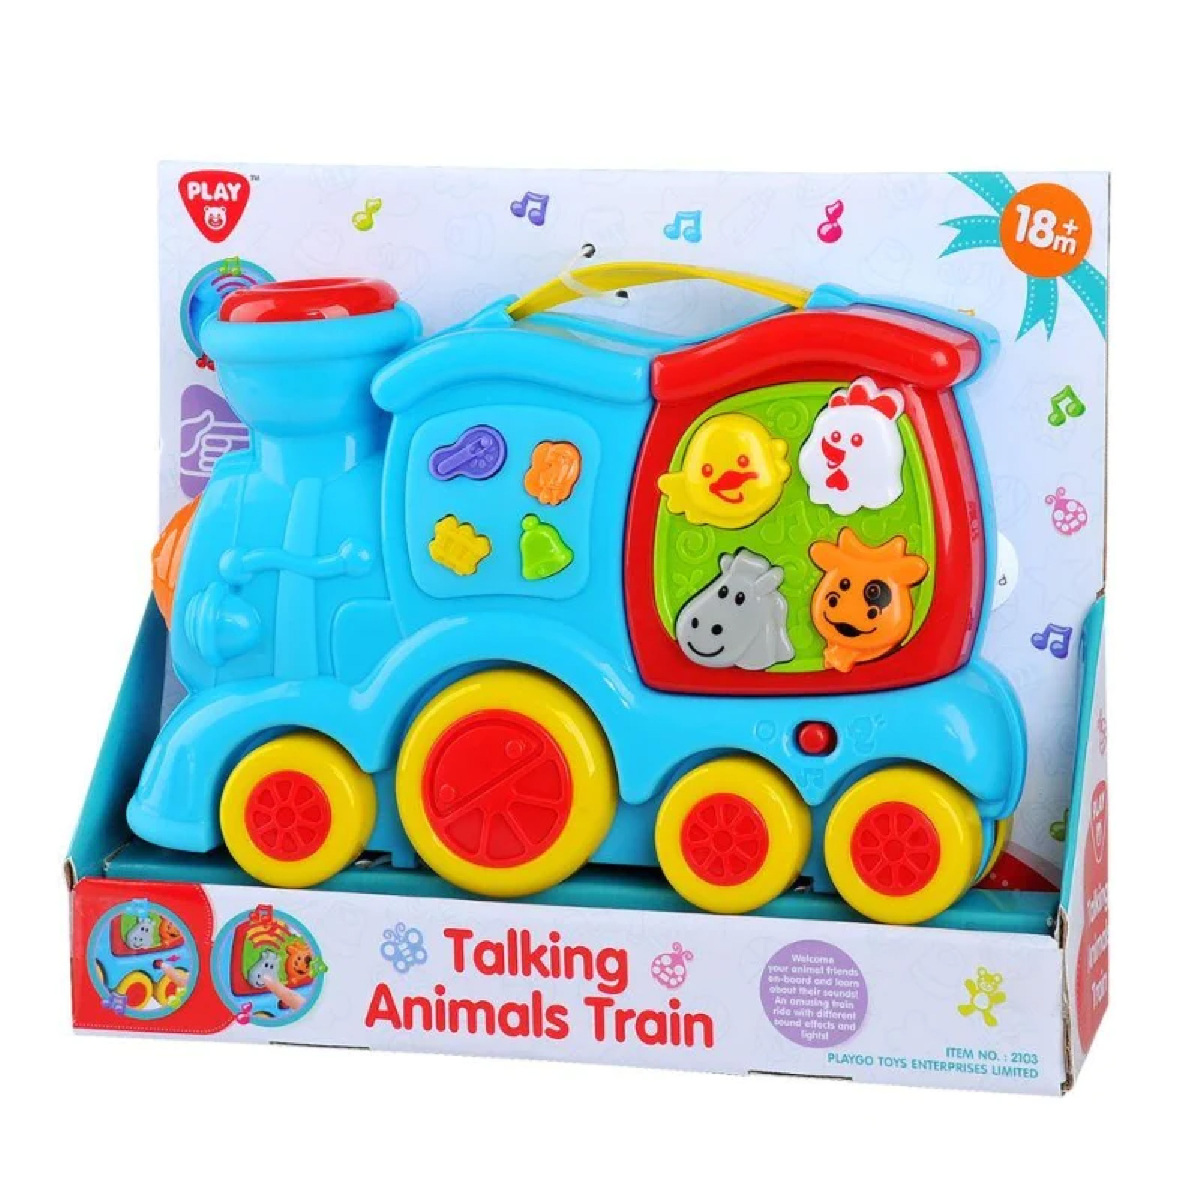 Play Go Talking Animal Train, Multicolour, 2103 Online at Best Price |  Infant Toys | Lulu Qatar